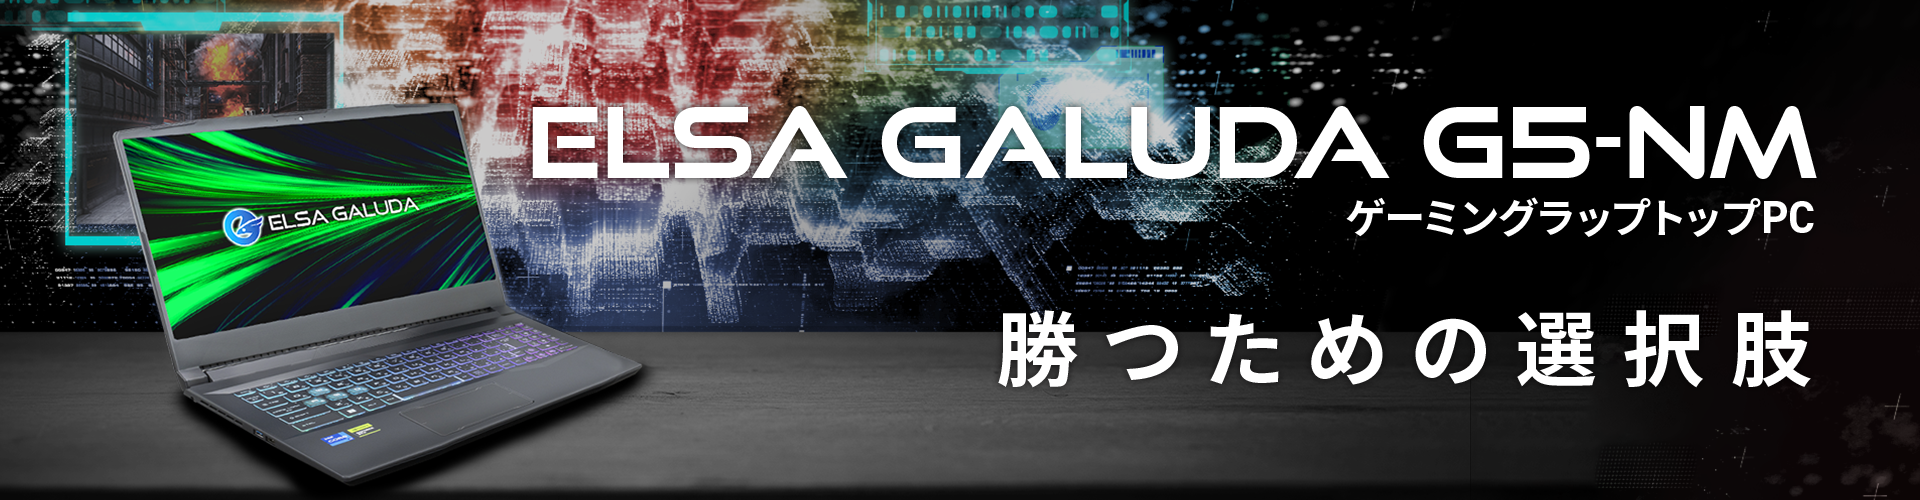 ELSA GALUDA G5-NM 勝つための選択肢